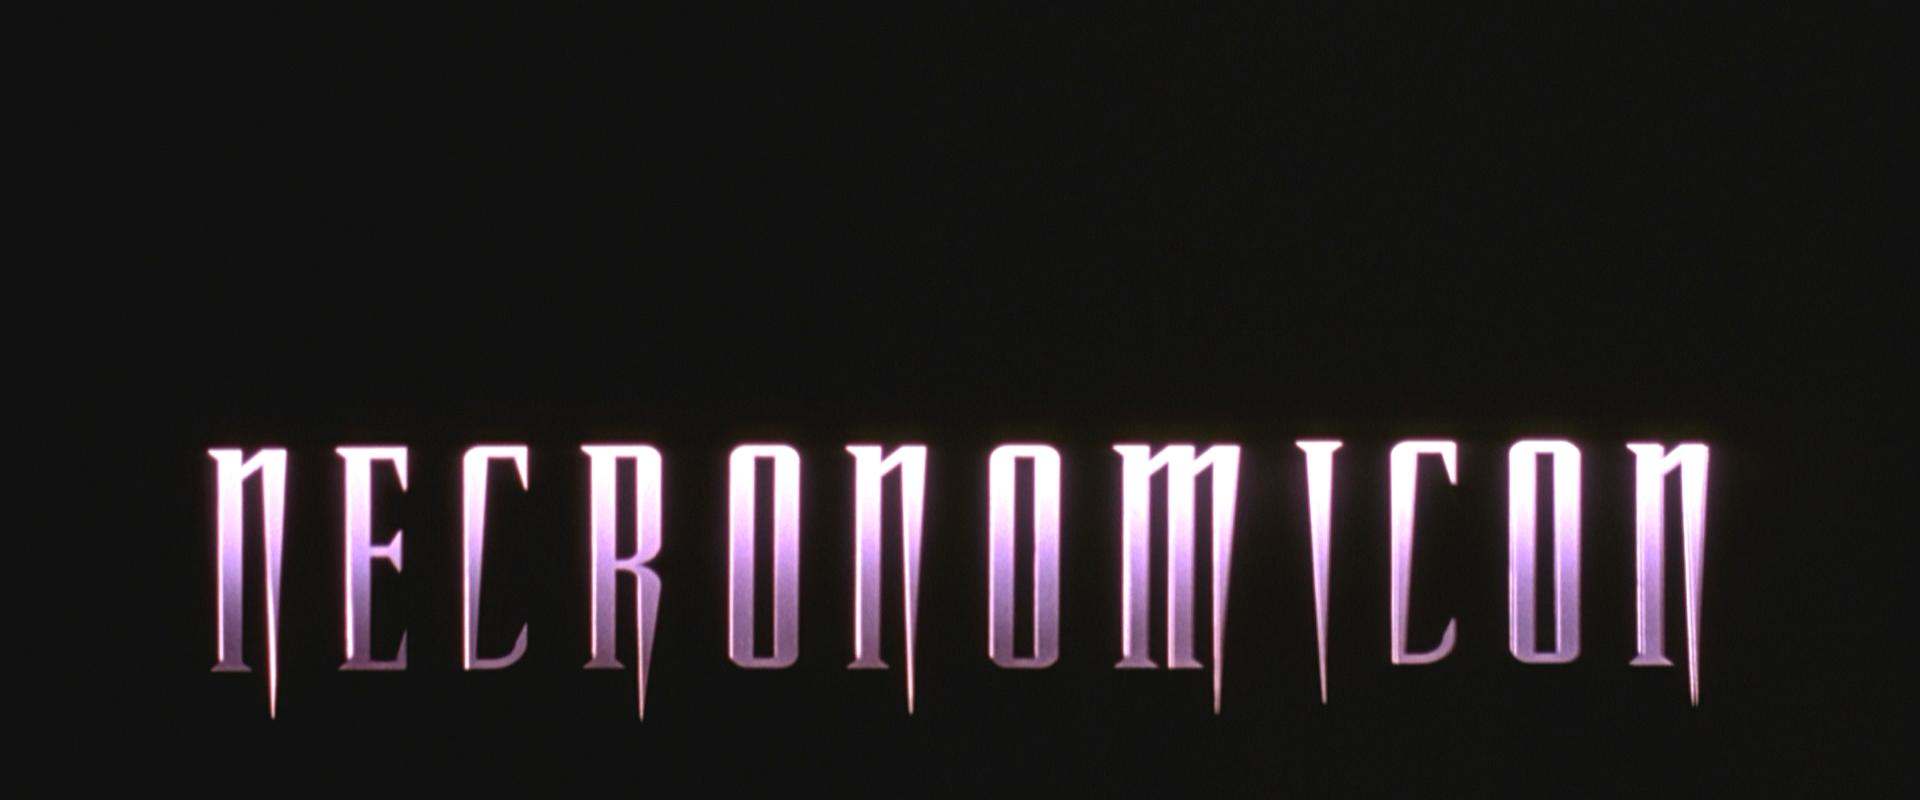 Necronomicon background 2